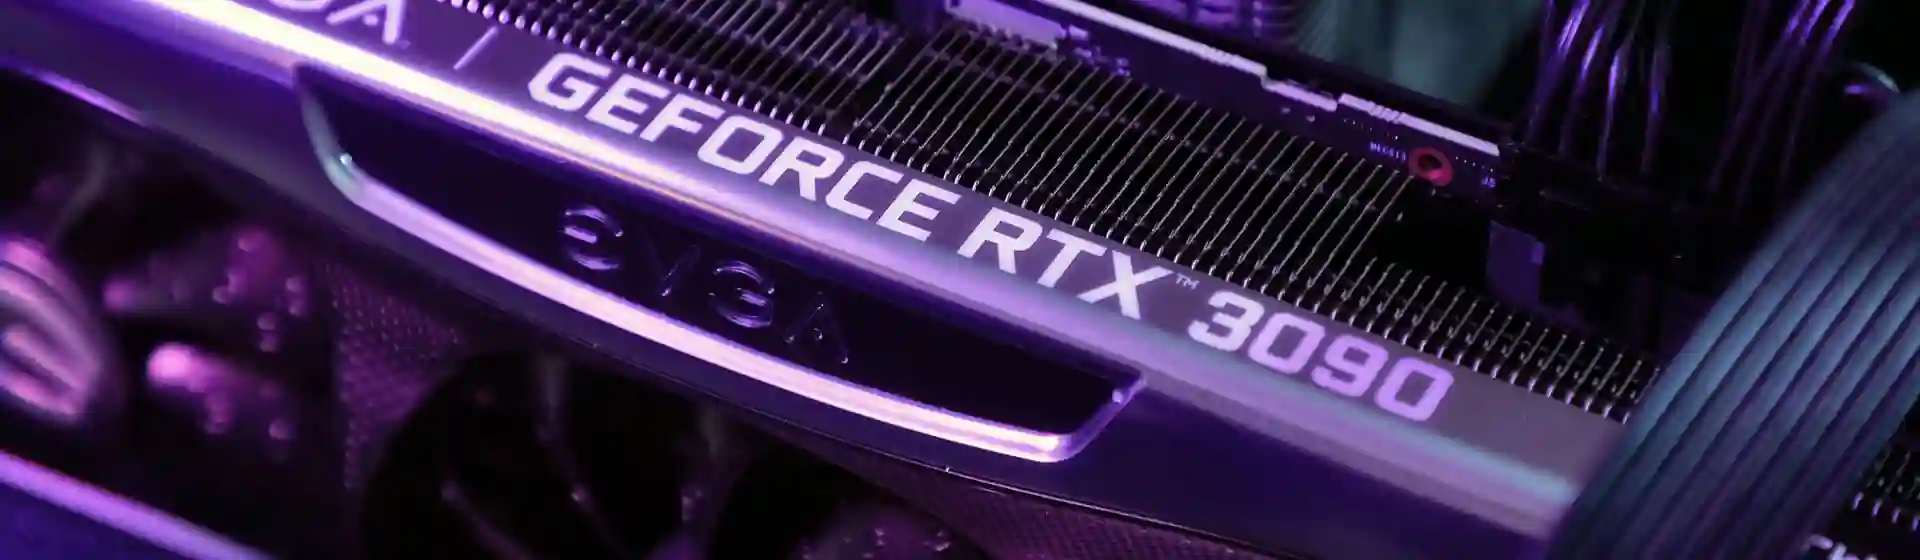 RTX 2080 e 16 GB de RAM para gráficos máximos: surgiram os